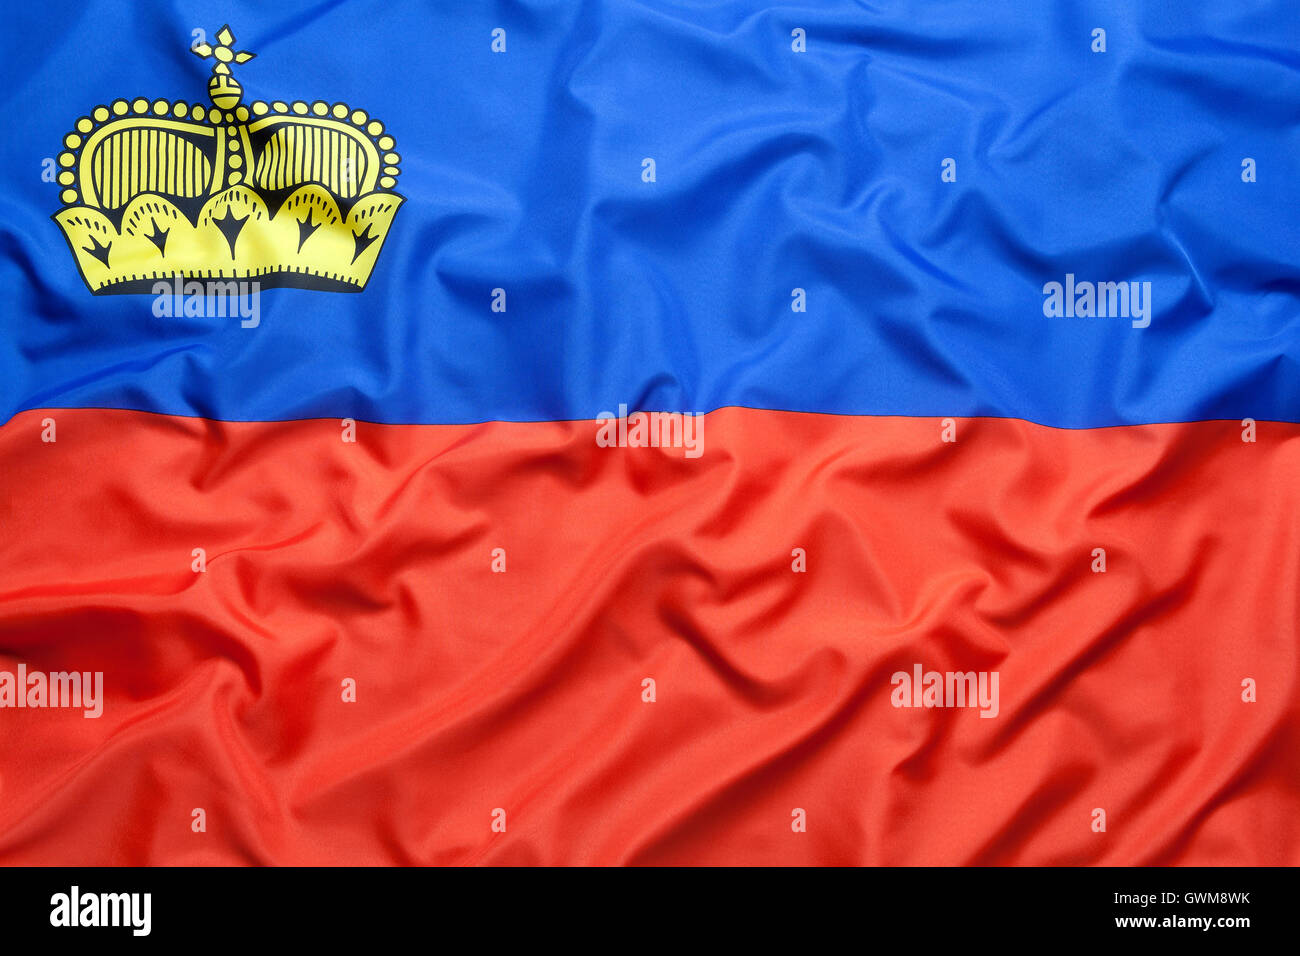 Textile flag of Liechtenstein for a background Stock Photo